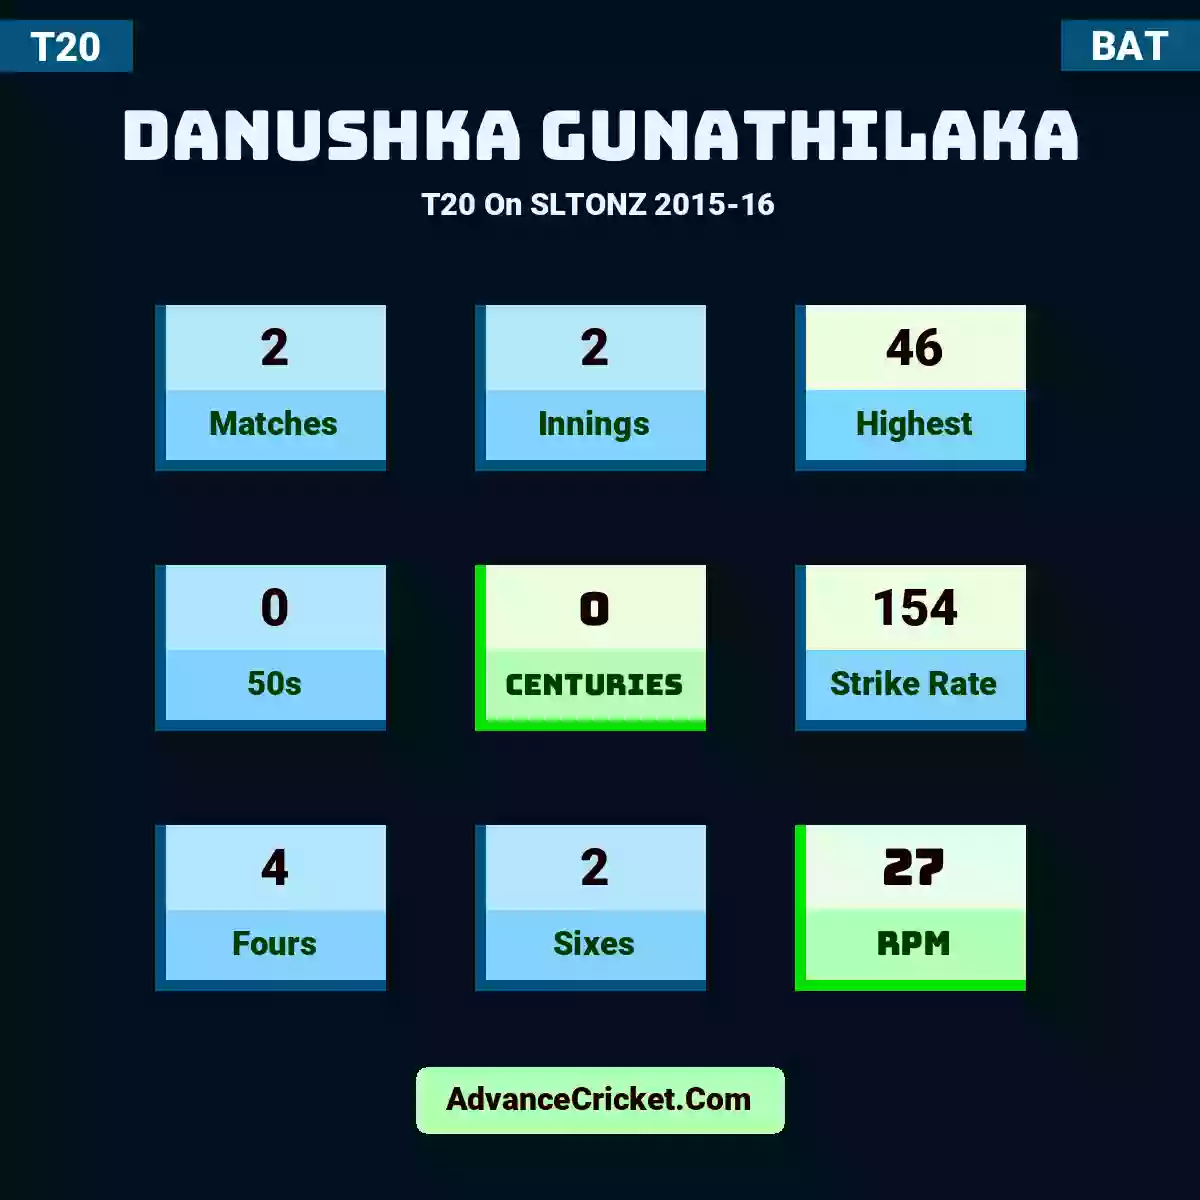 Danushka Gunathilaka T20  On SLTONZ 2015-16, Danushka Gunathilaka played 2 matches, scored 46 runs as highest, 0 half-centuries, and 0 centuries, with a strike rate of 154. D.Gunathilaka hit 4 fours and 2 sixes, with an RPM of 27.